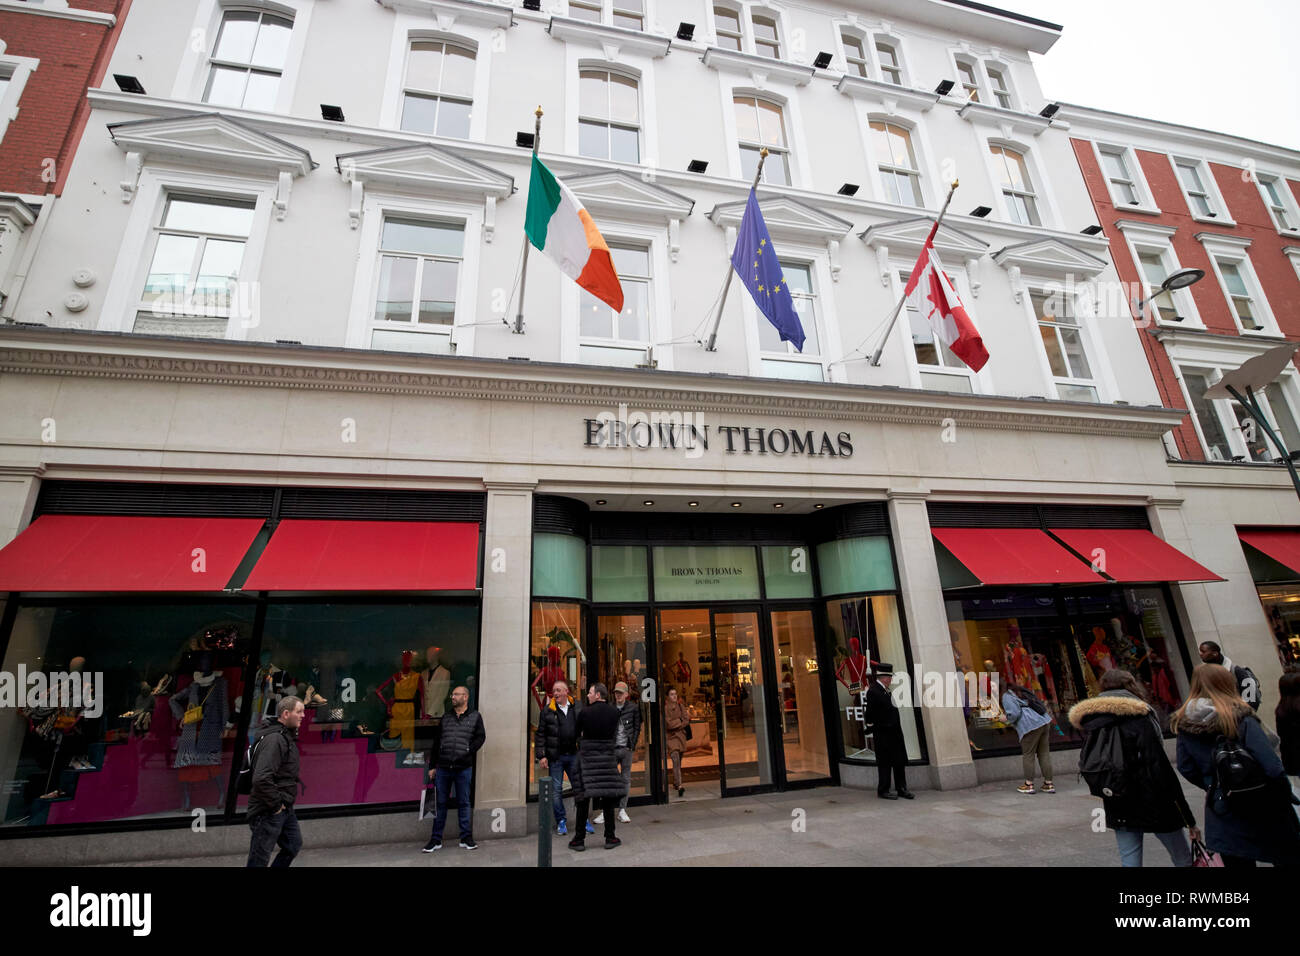 Louis Vuitton Dublin Brown Thomas Store, Ireland